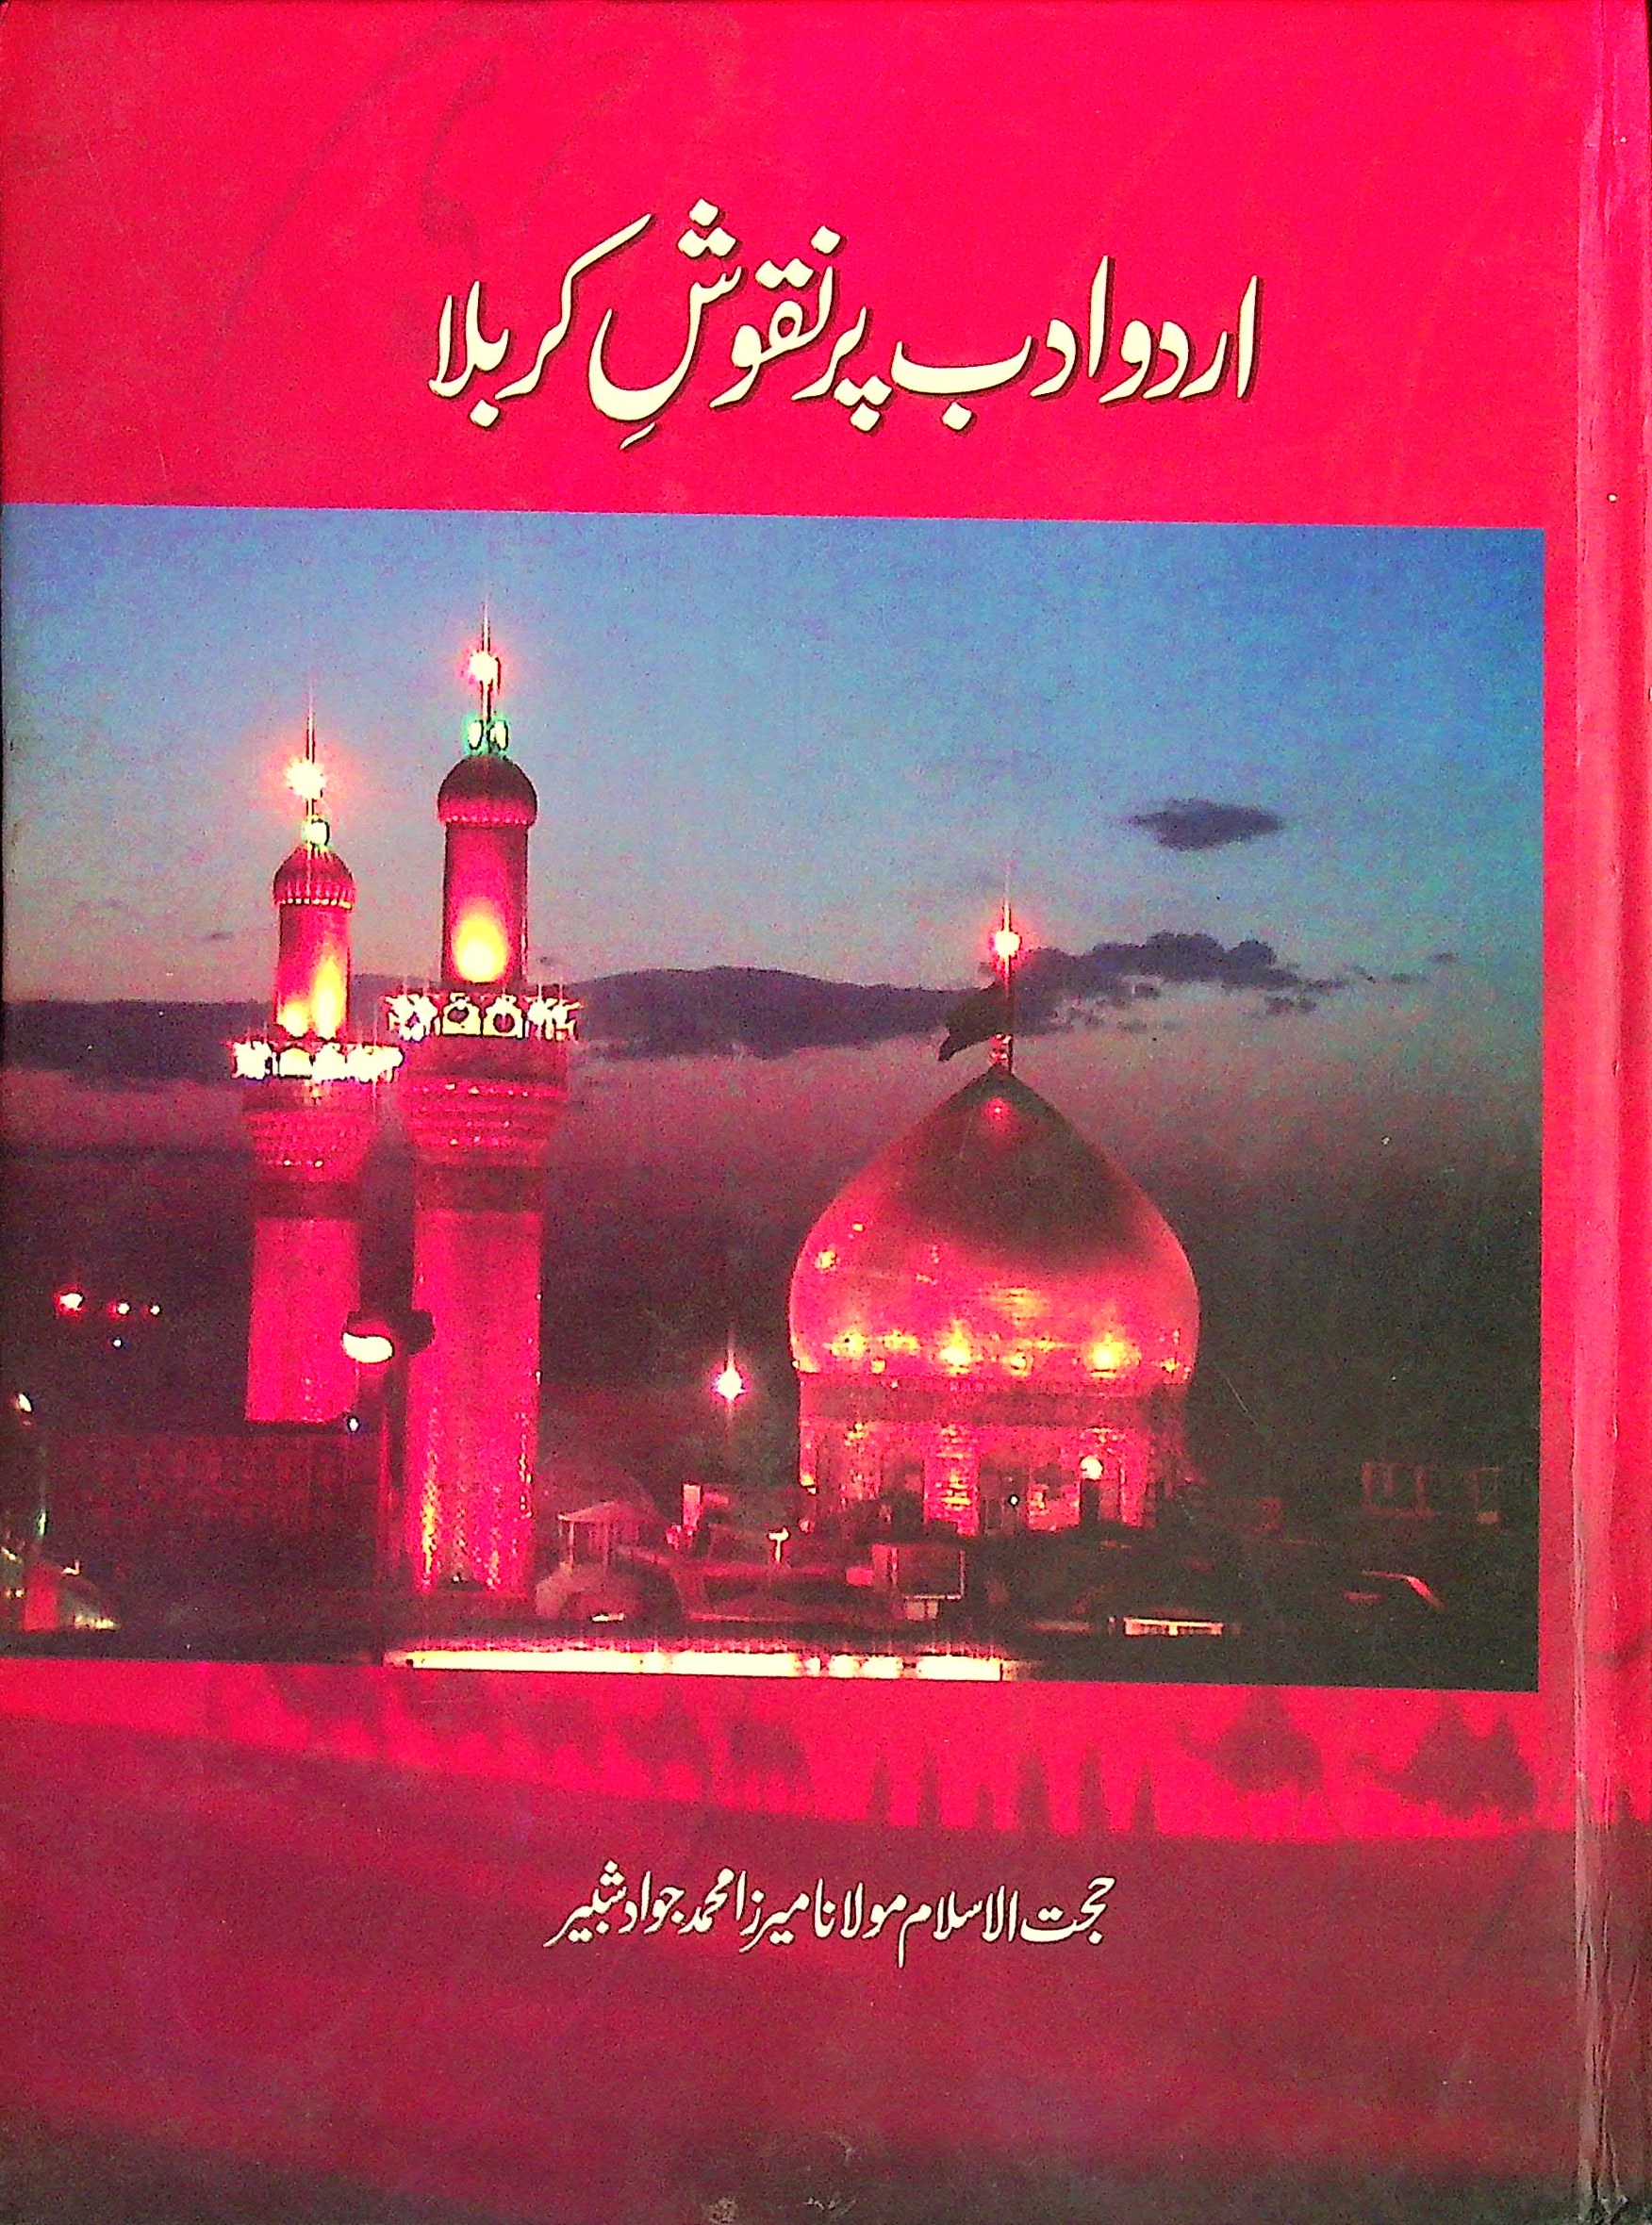 Urdu adab par nuqoosh-e-karbala - اردو ادب پر نقوش کربلا